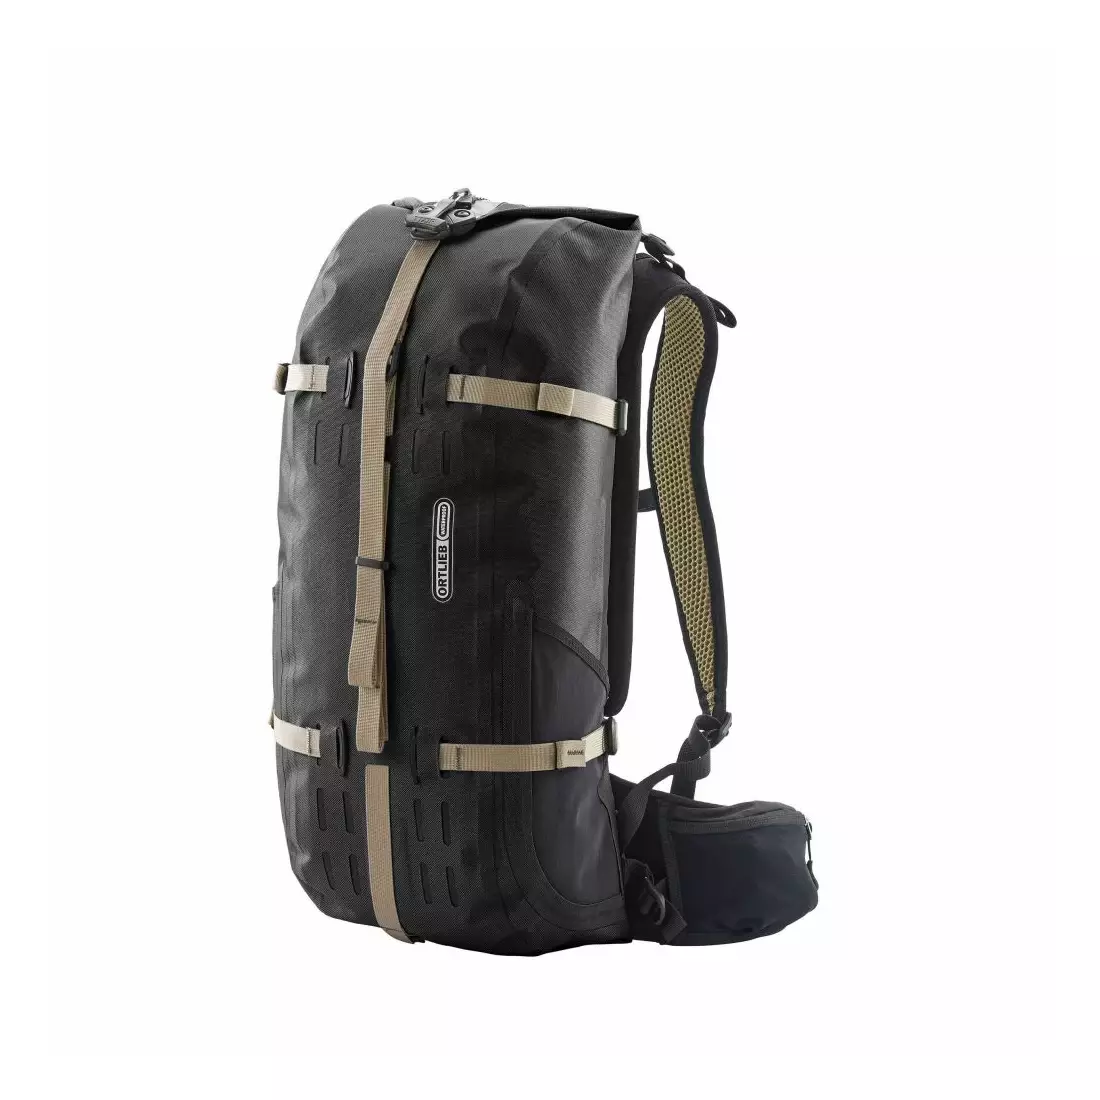 ORTLIEB wodoodporny plecak ATRACK 25L black O-R7004